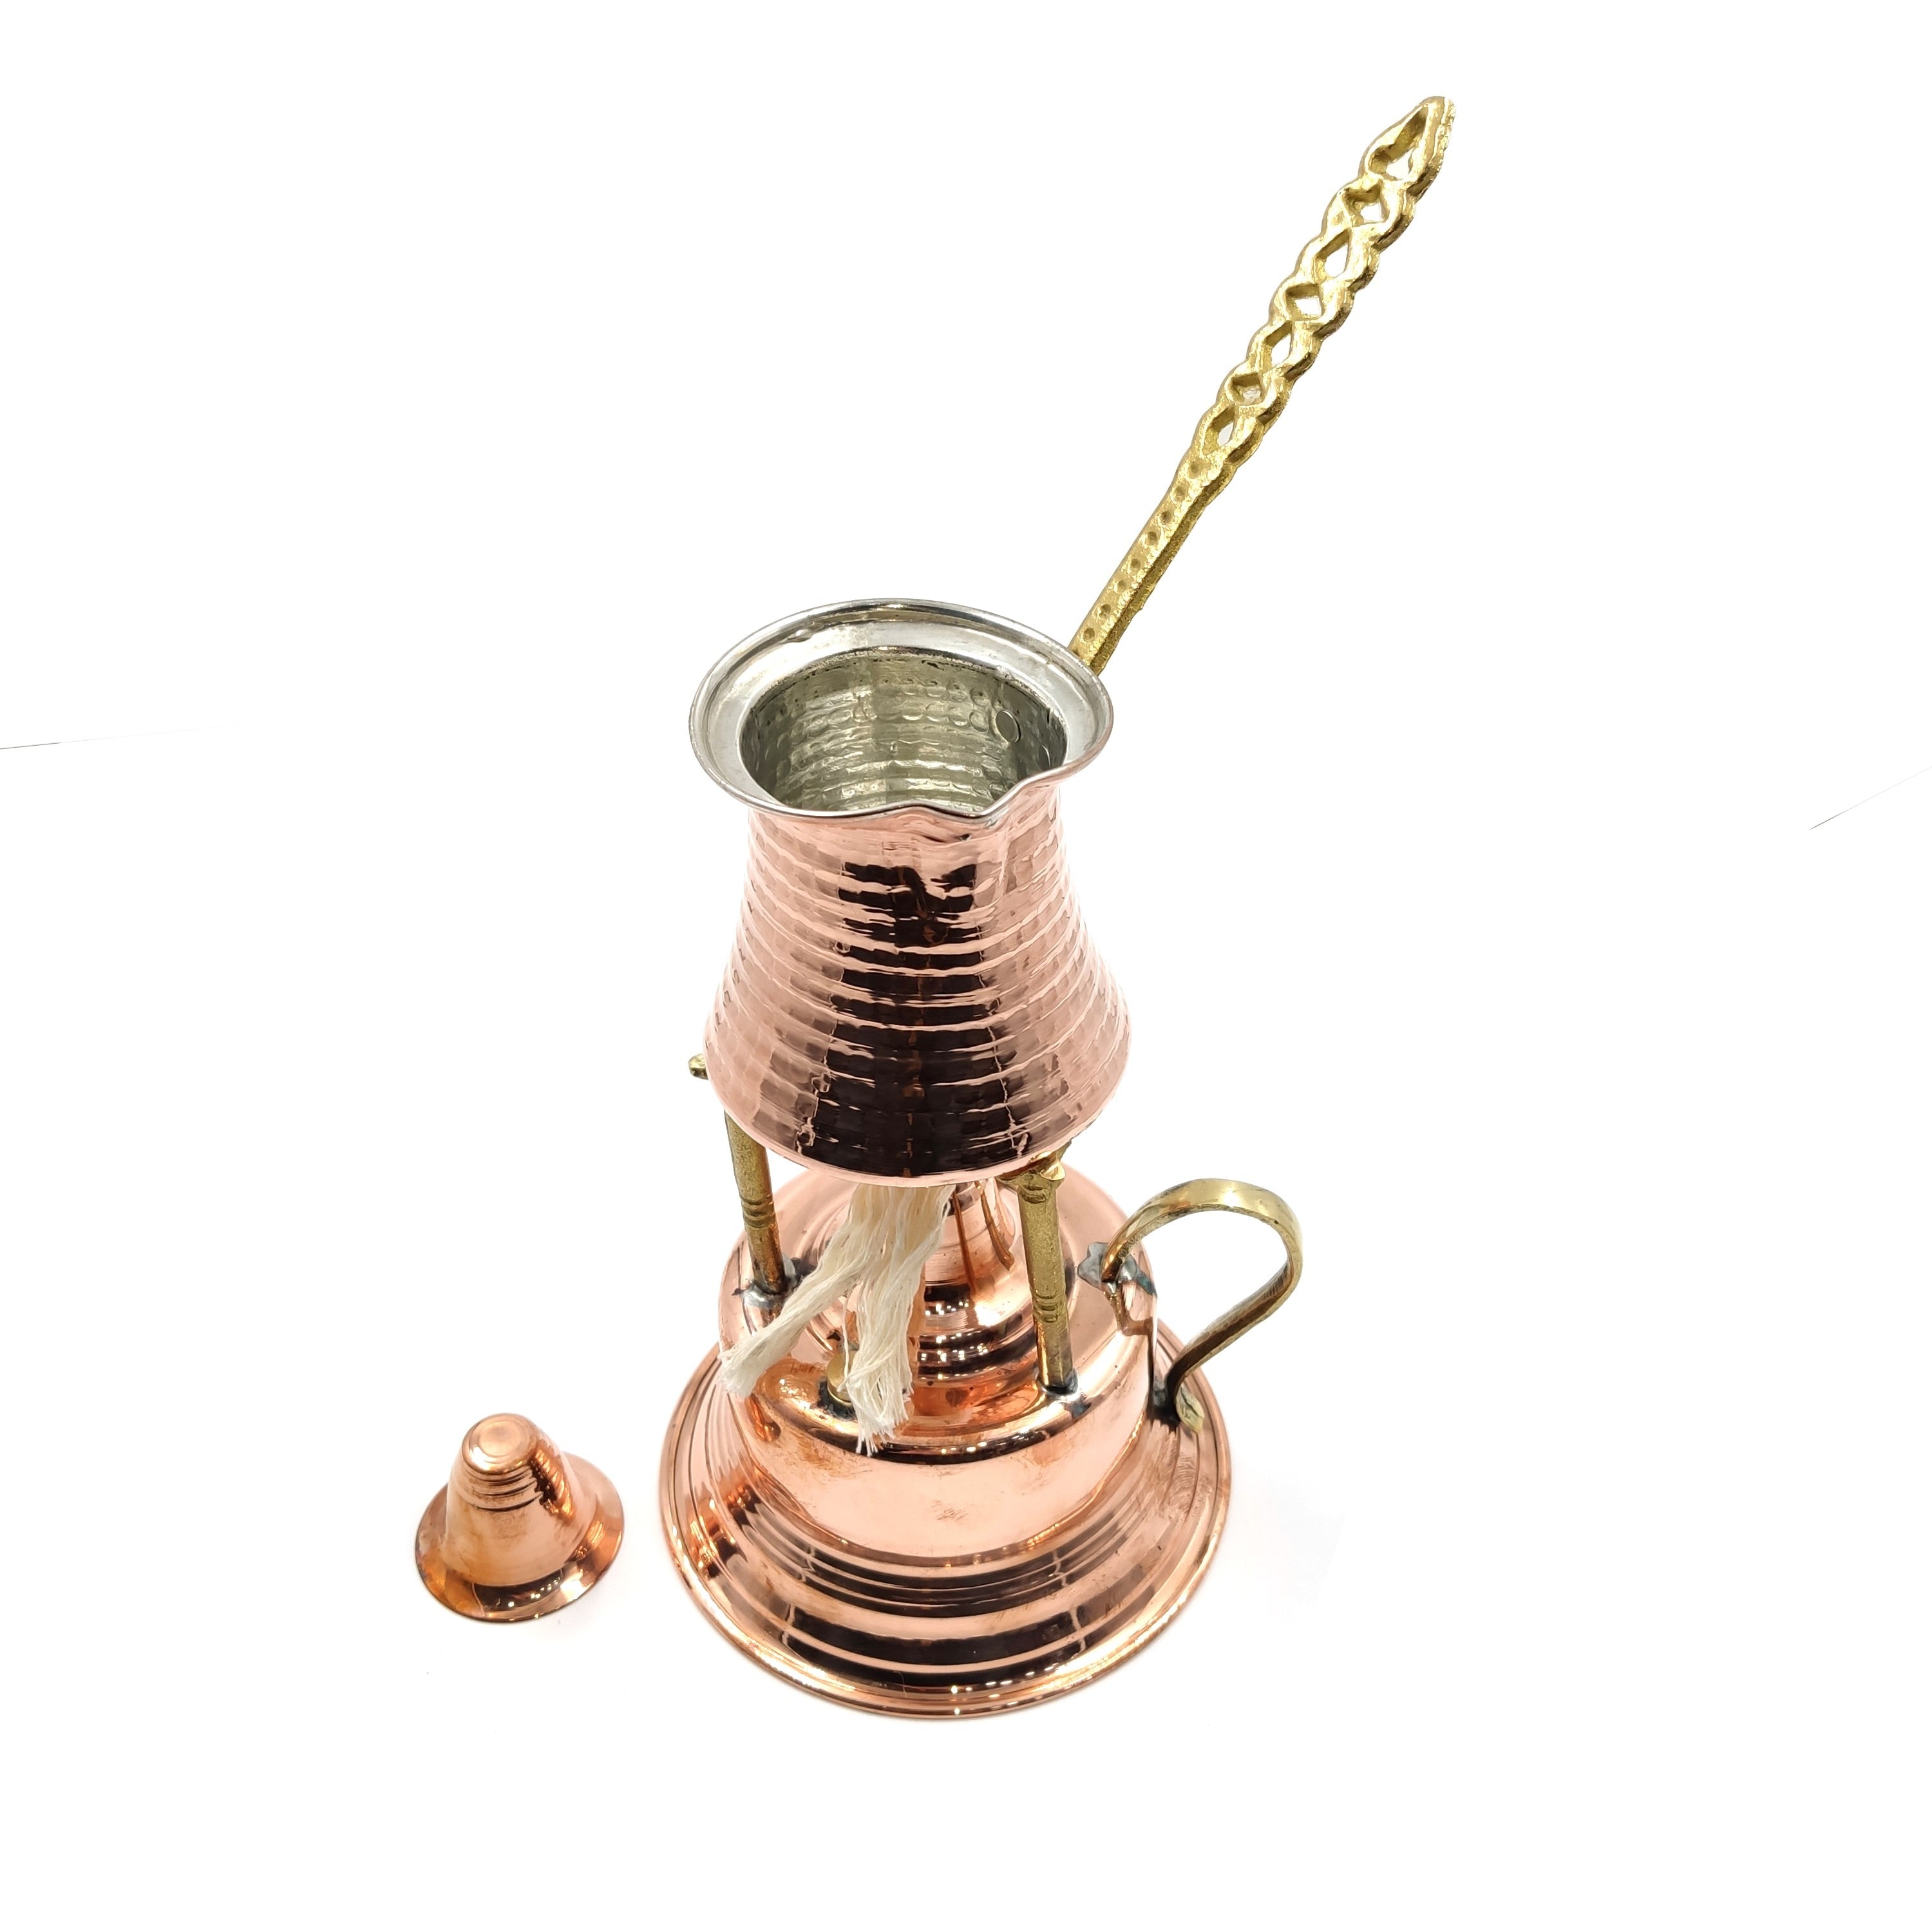 Brass Handmade Copper Turkish Coffee Maker Alcohol Burner Brewing English Coffee Using Traditional Tabletop Burner